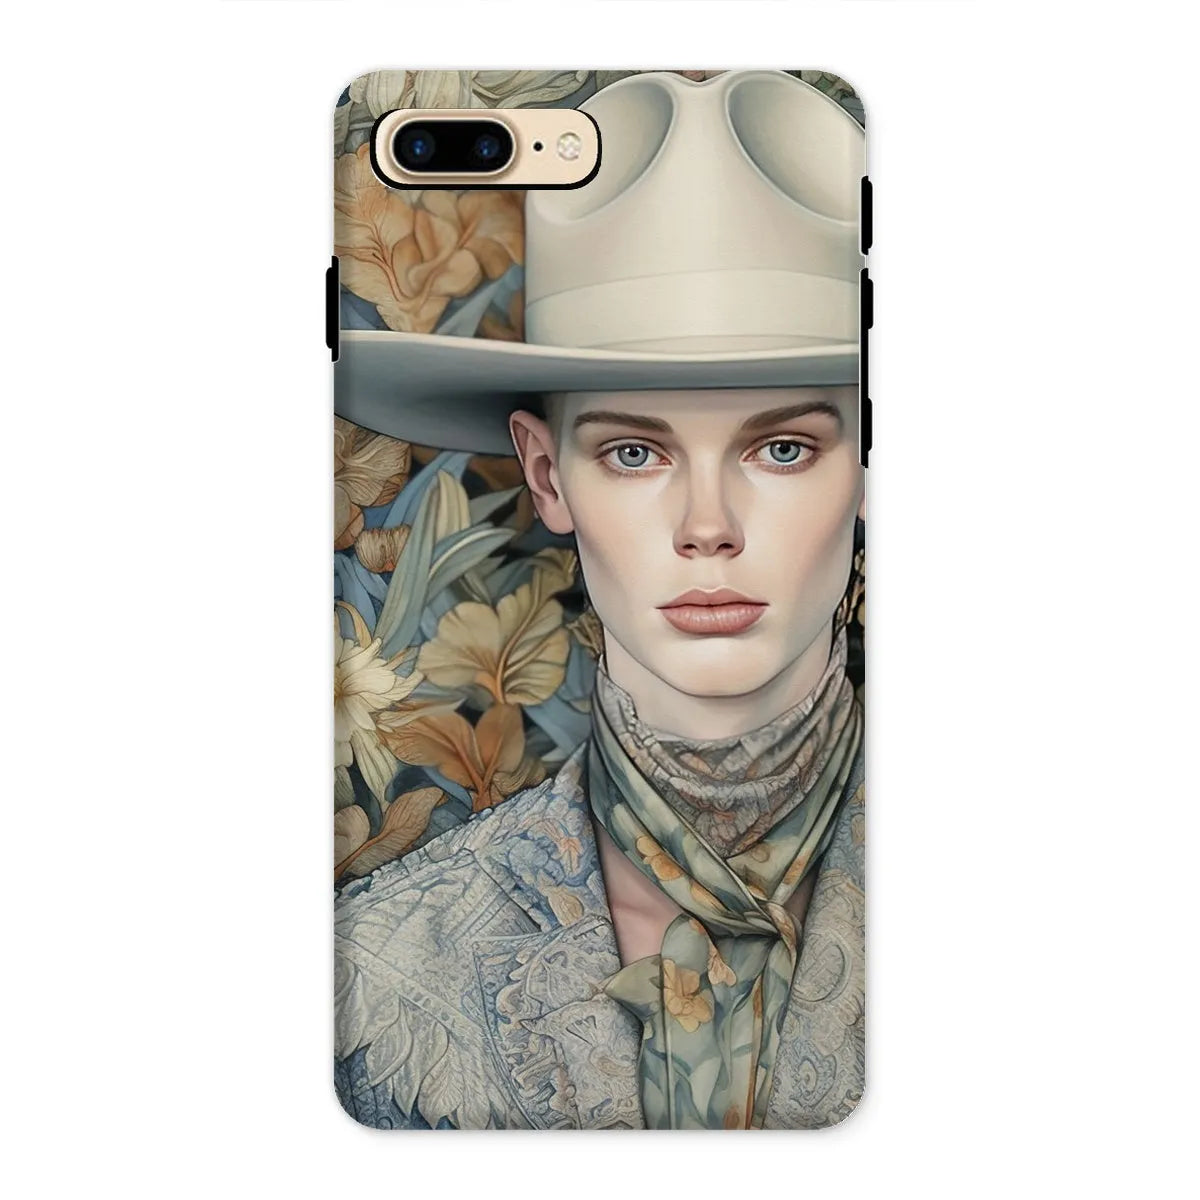 Jasper - Dandy Twink Cowboy Aesthetic Art Phone Case - Iphone 8 Plus / Matte - Mobile Phone Cases - Aesthetic Art